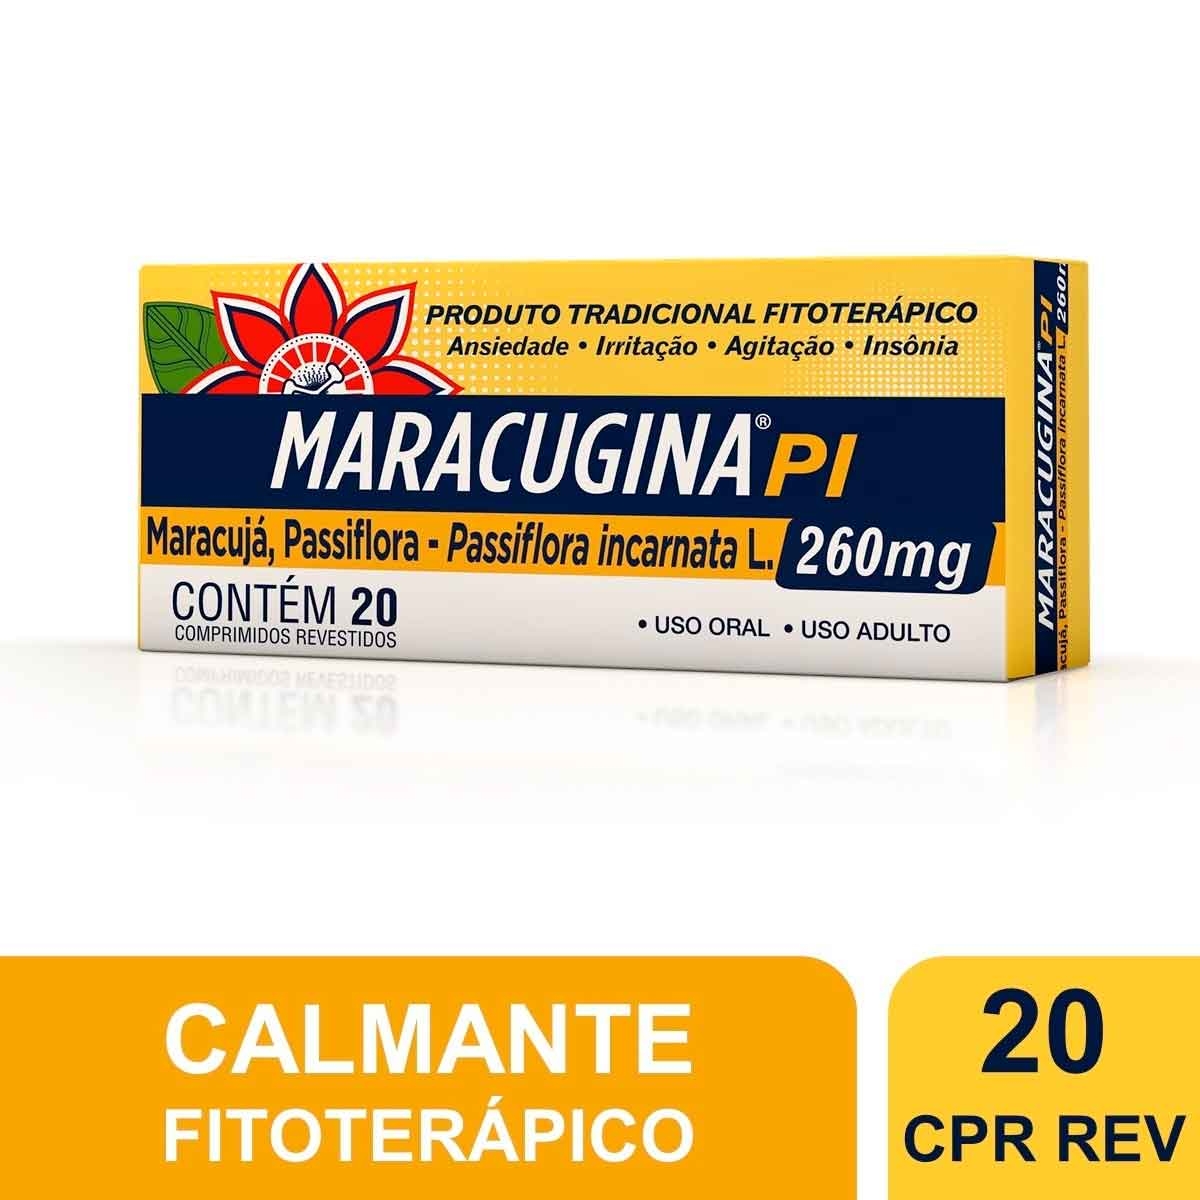 Maracugina PI 260mg com 20 comprimidos